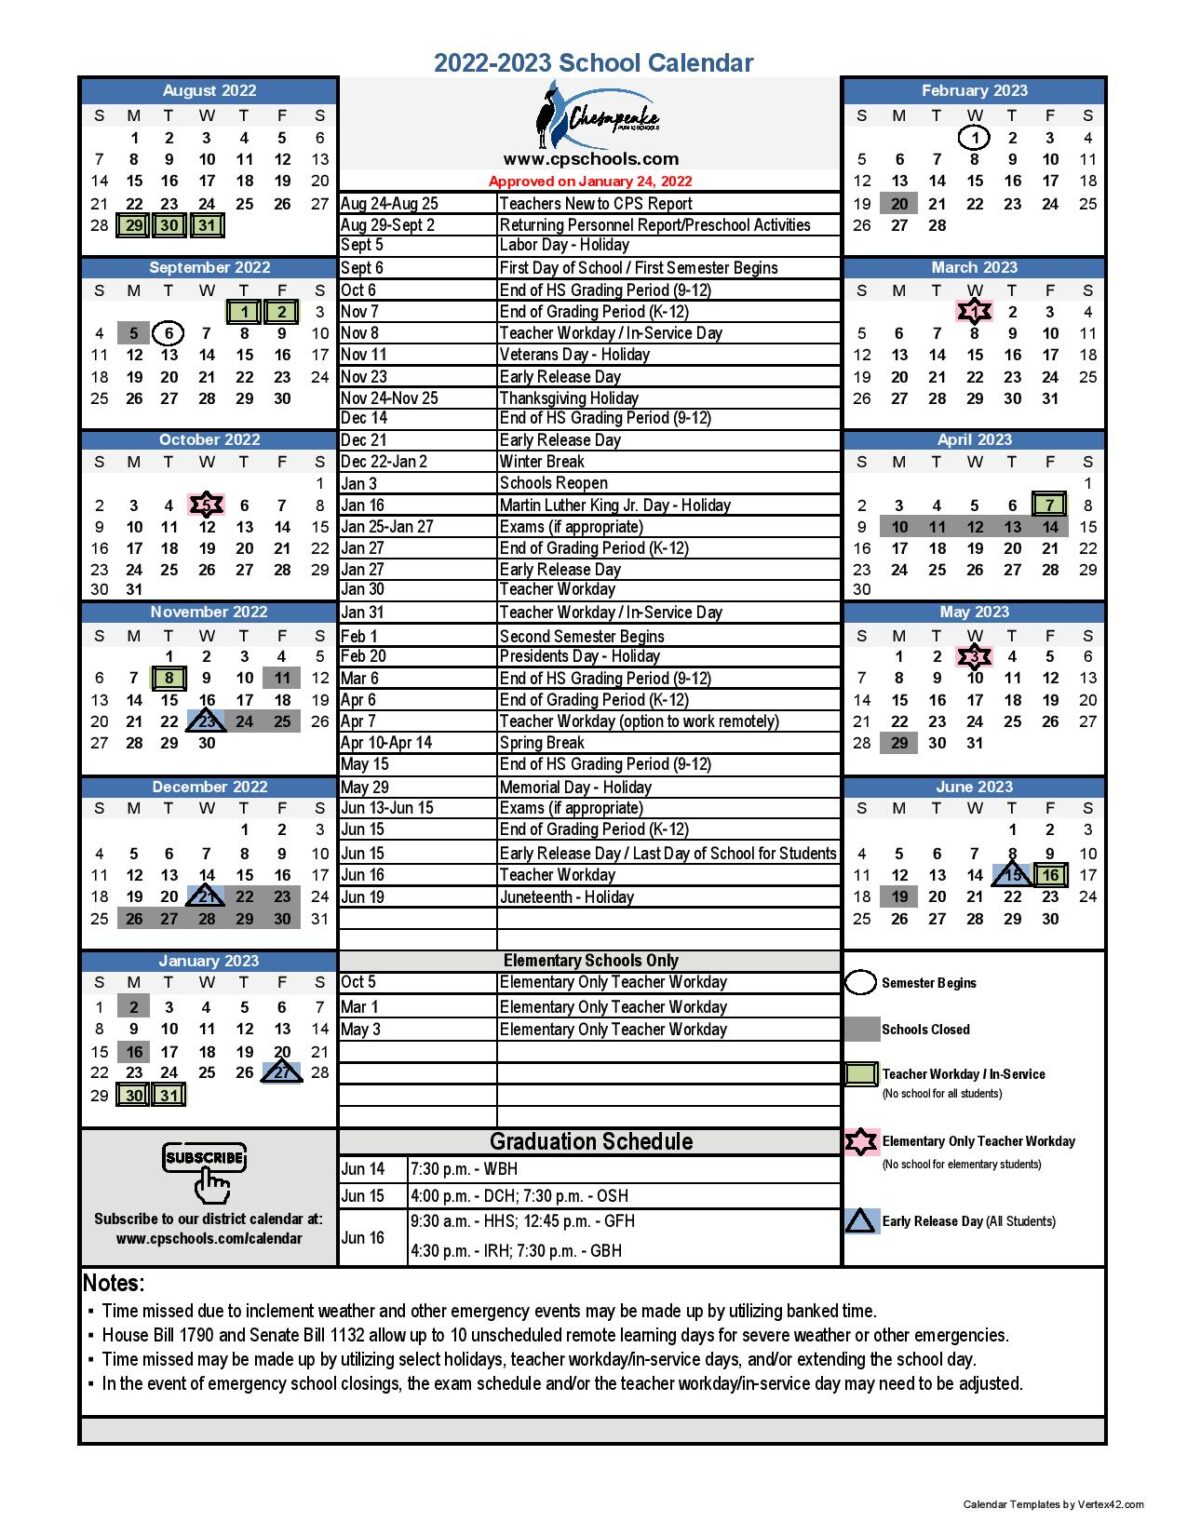 chesapeake-public-schools-calendar-2022-23